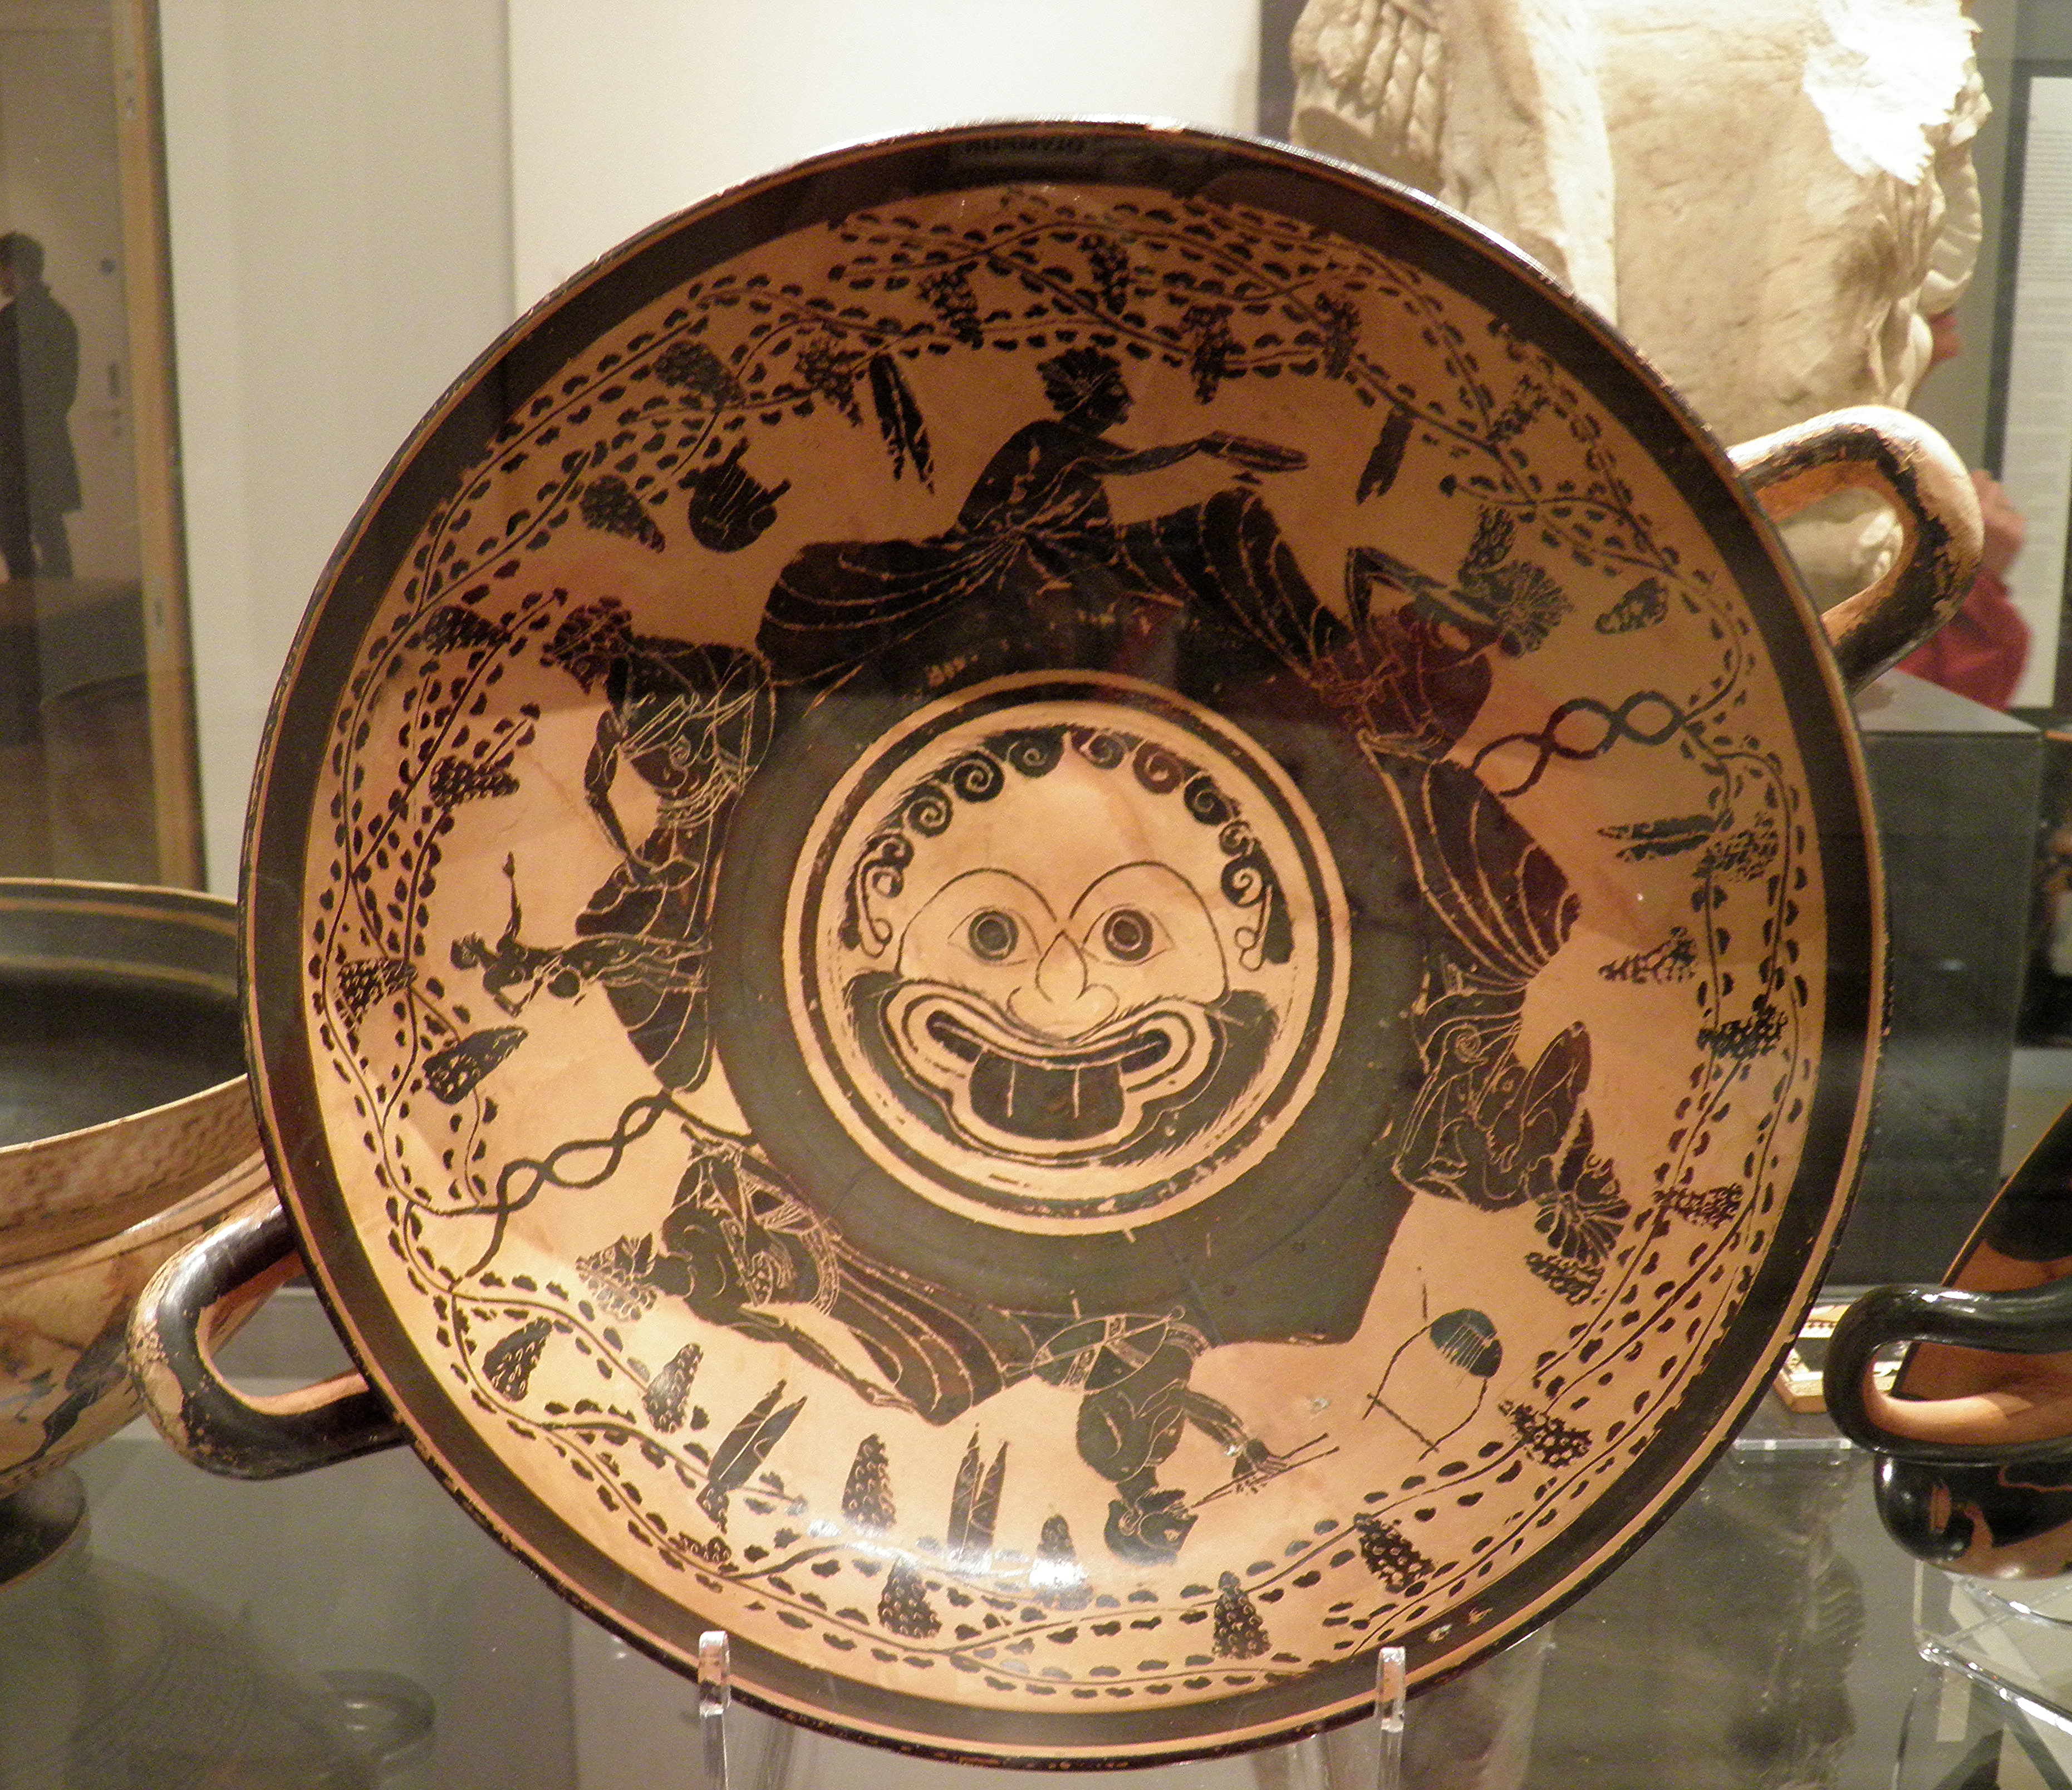 Gorgons On Athenian Pottery 6th Century Bc Stock Illustration